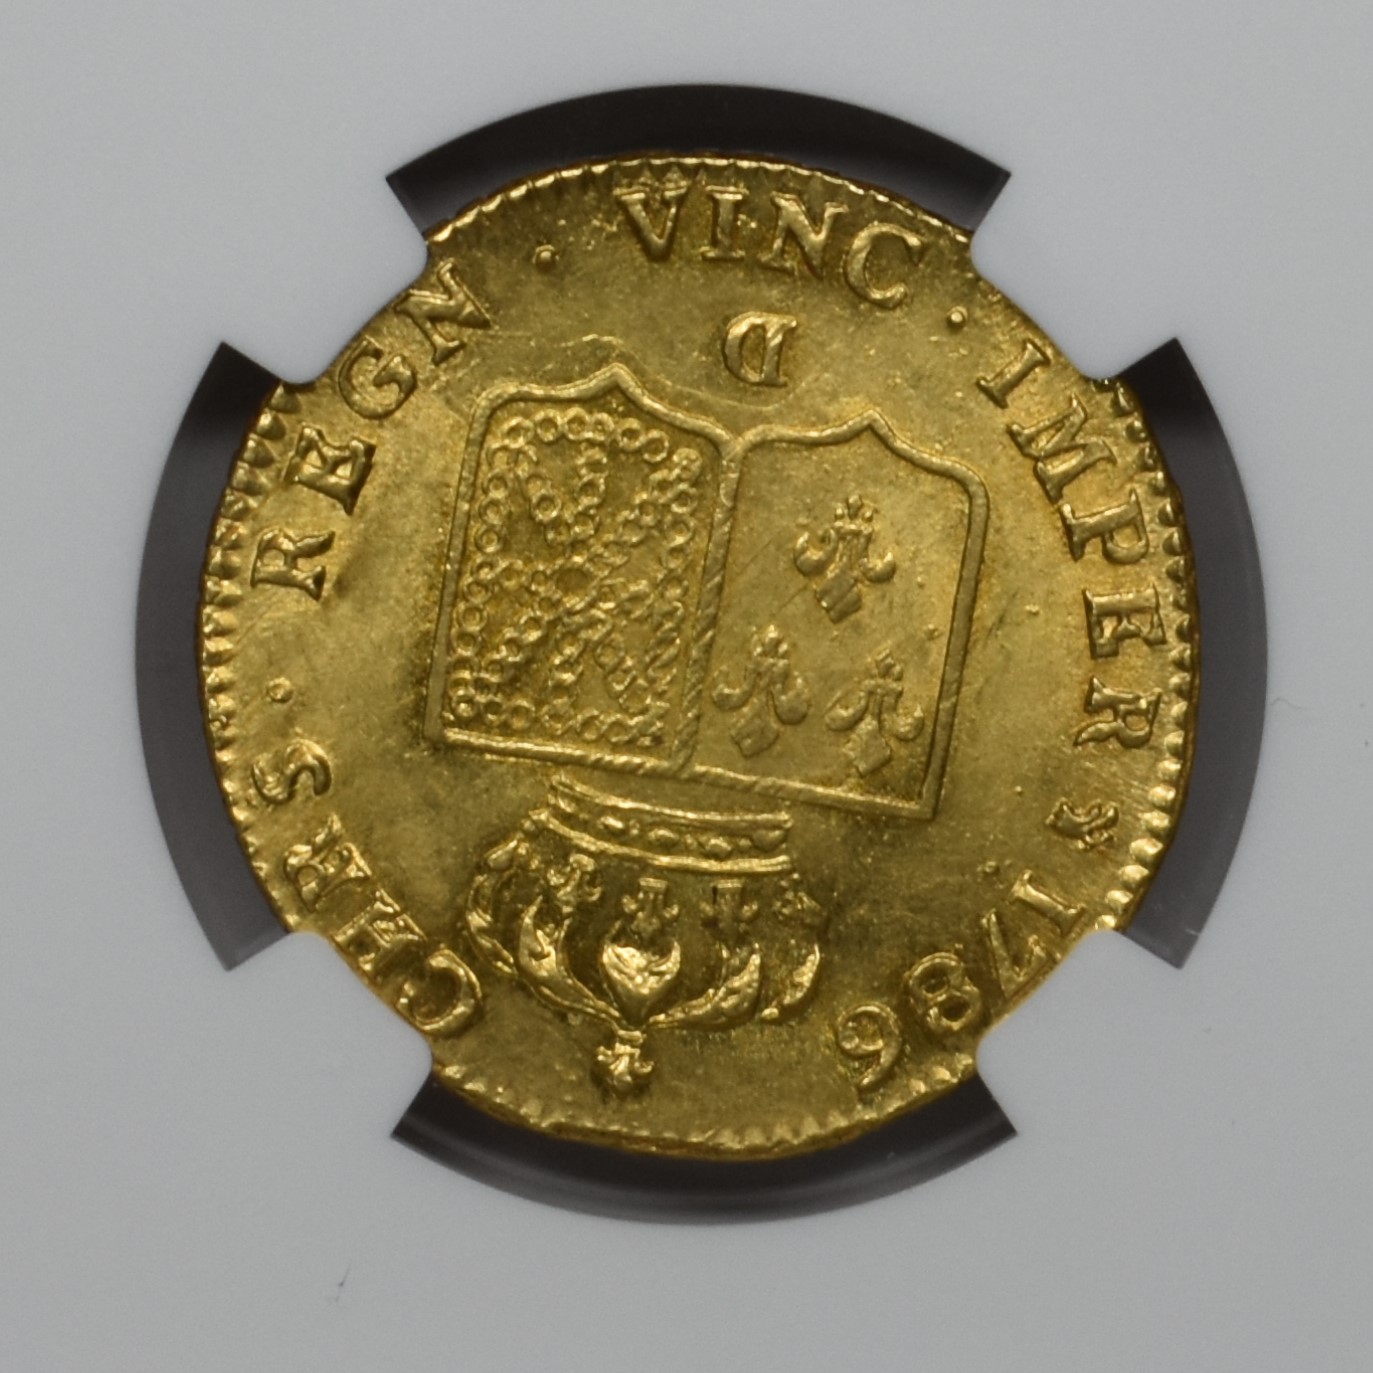 Sold】1786D年 ルイ16世 2ルイドール金貨 MS63 NGC | ソブリンパートナーズ